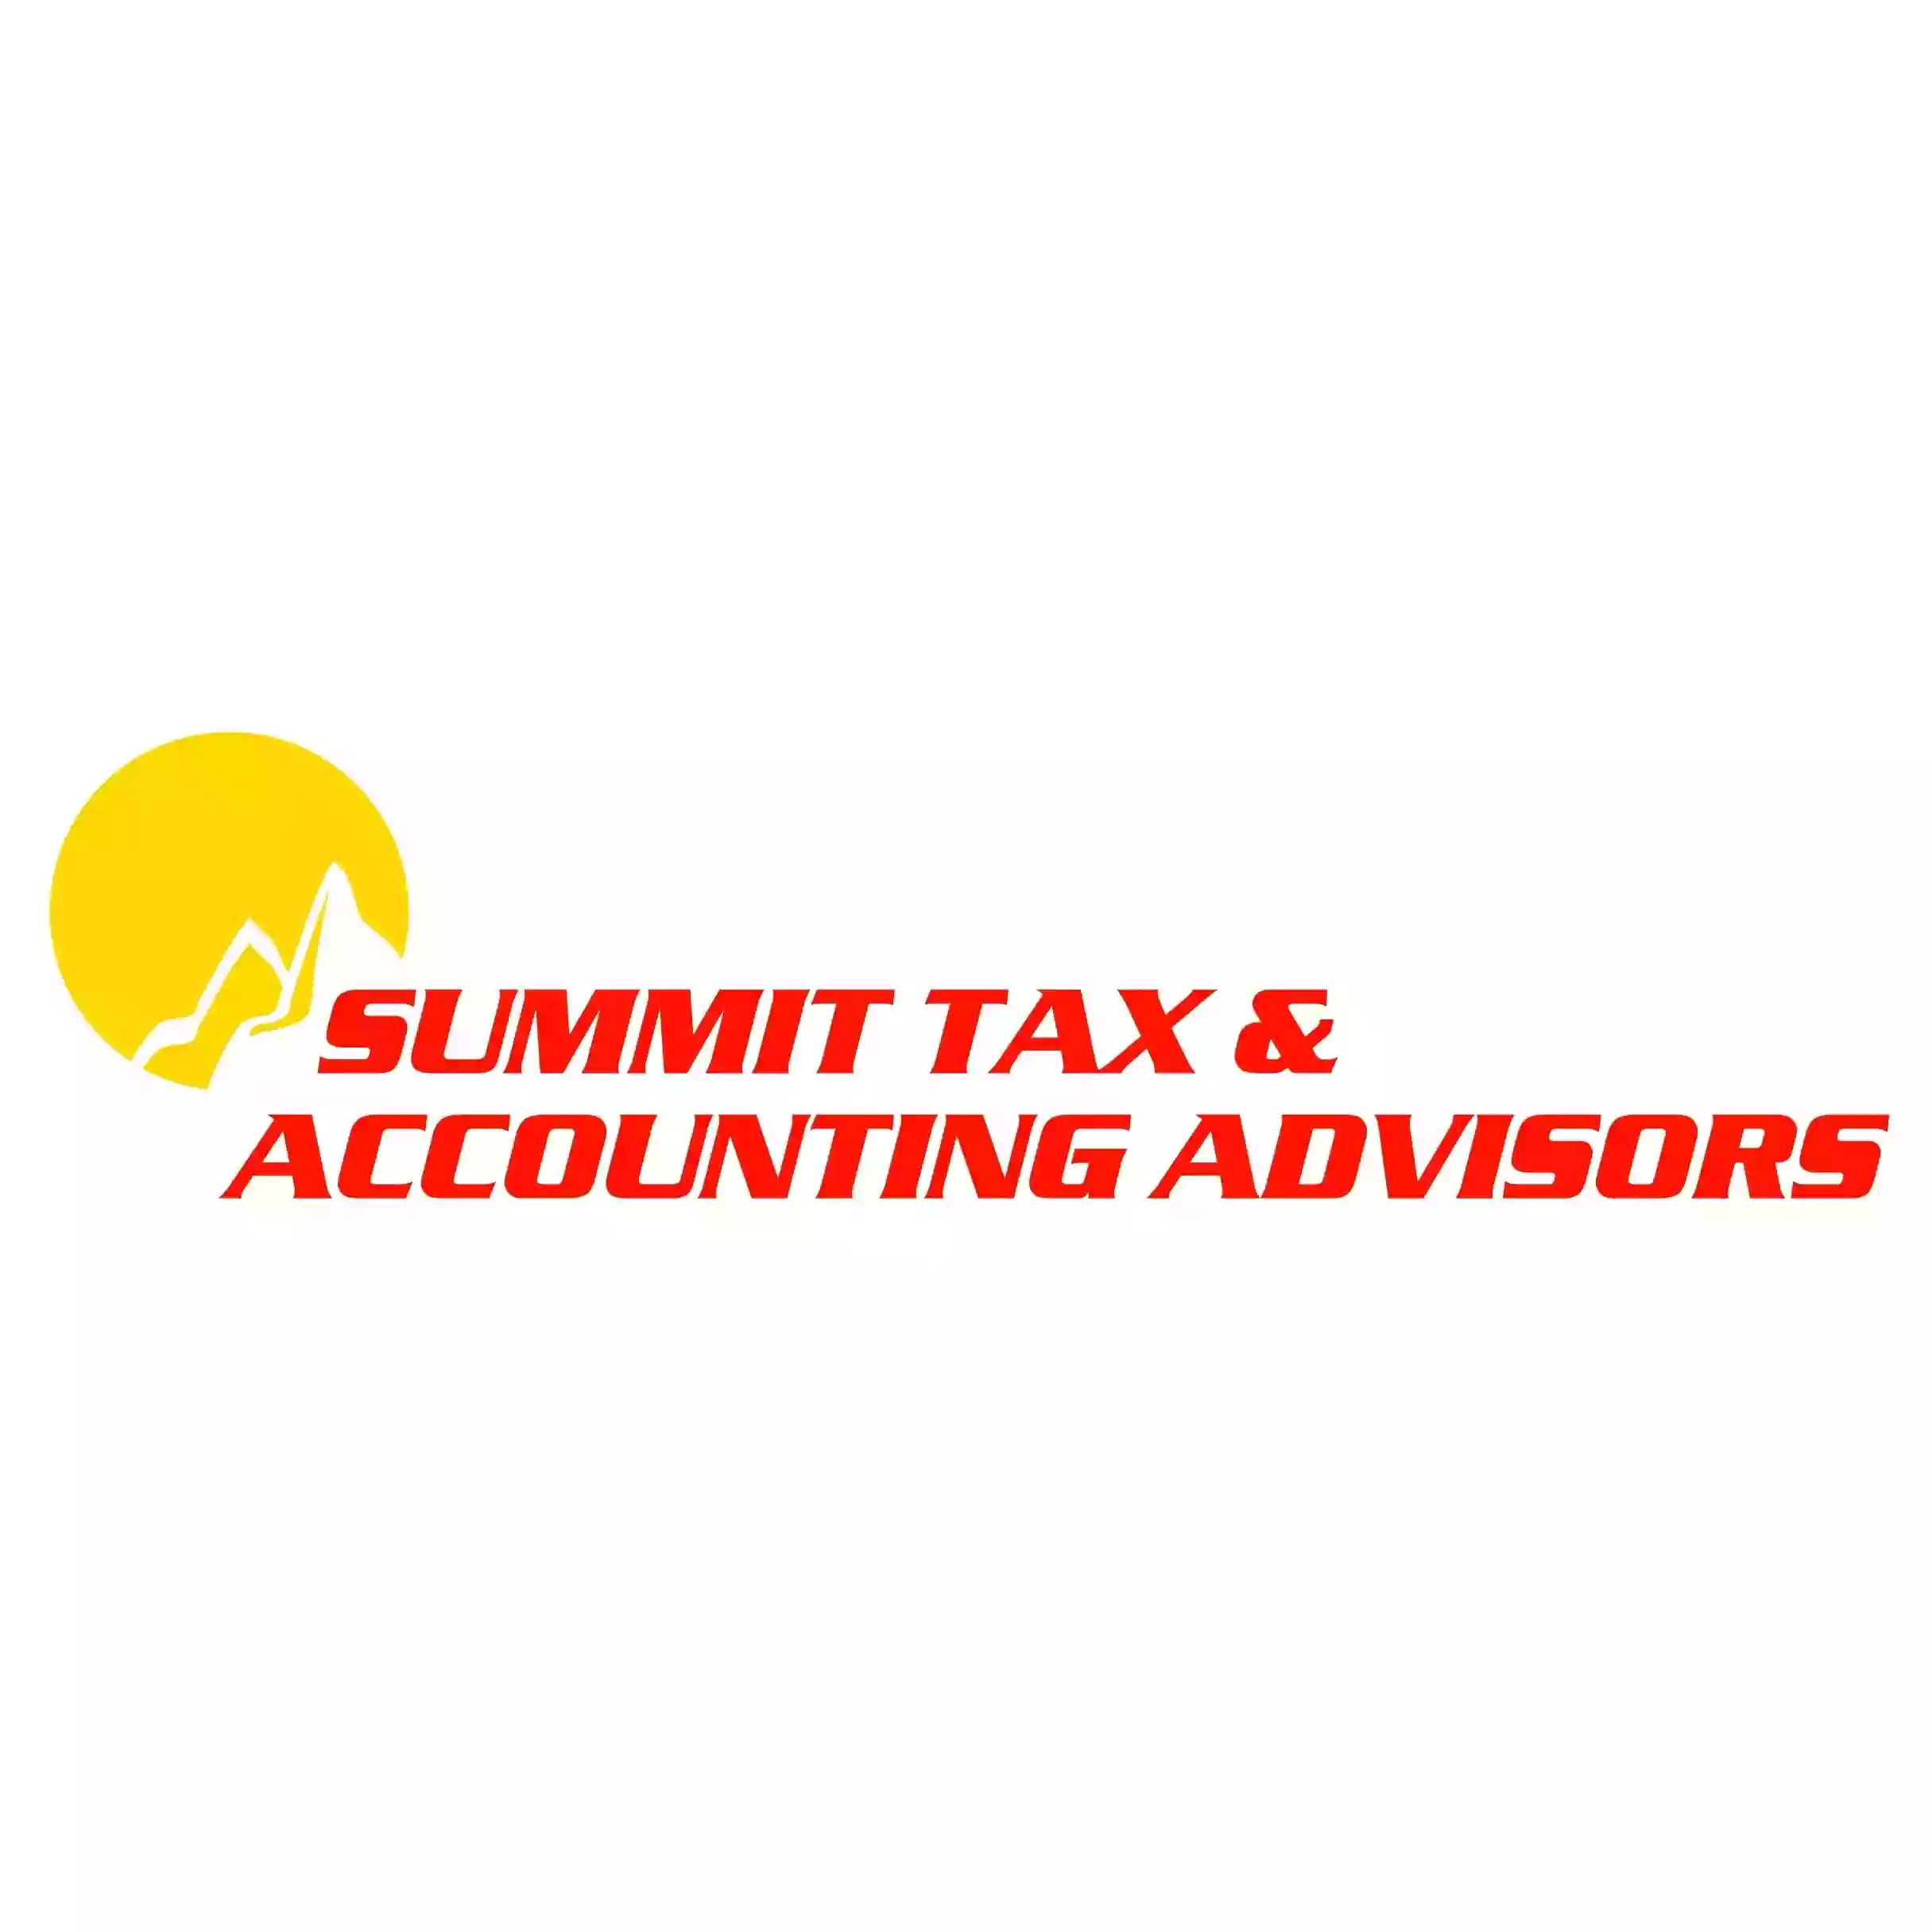 Summit Tax & Accounting Advisors